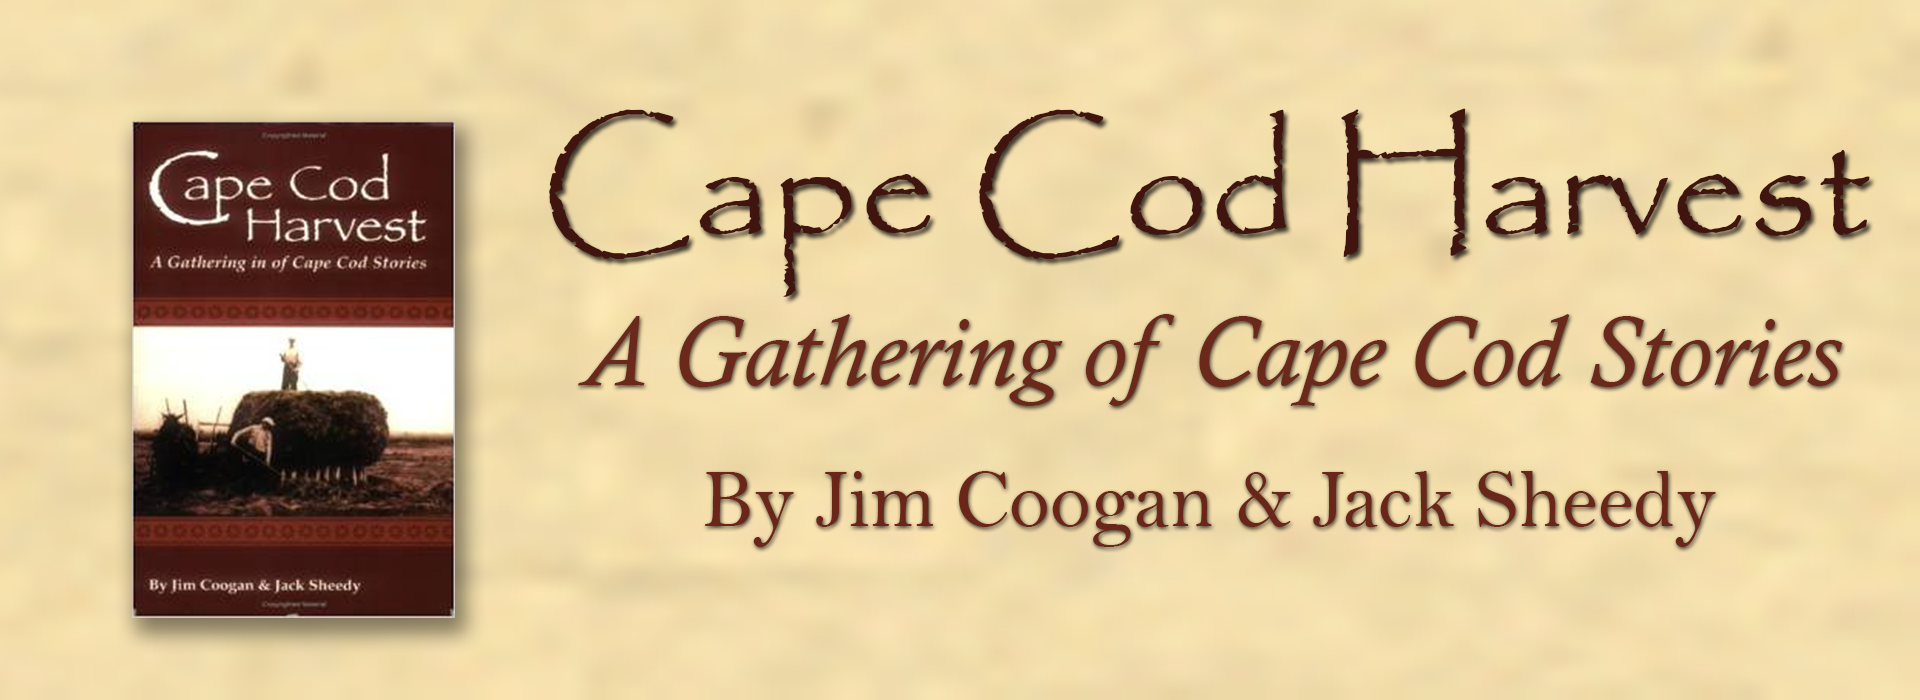 Cape Cod Harvest